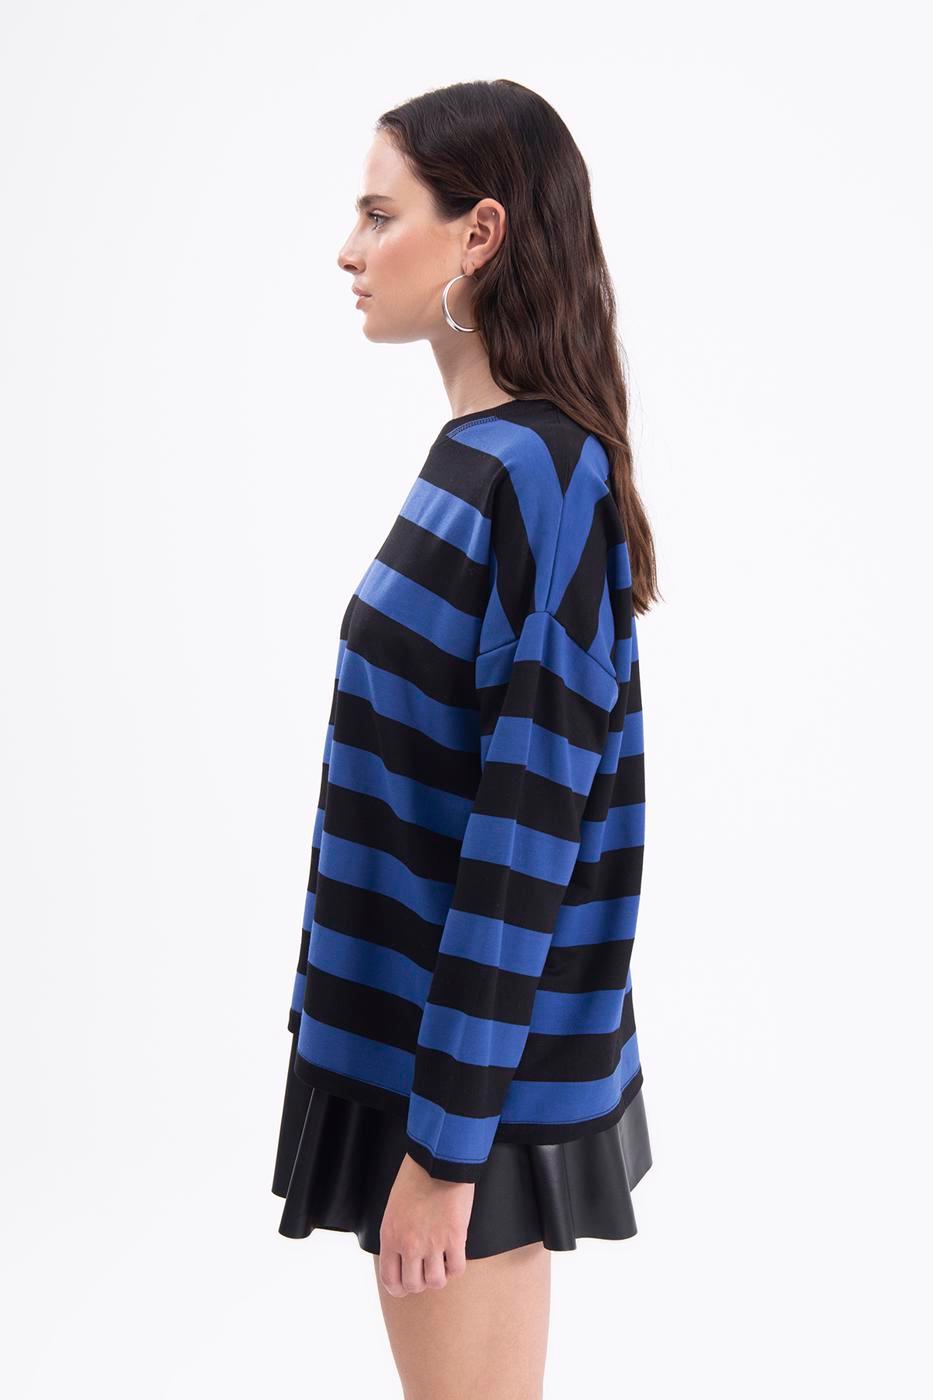 Striped Basic Sweatshirt ZEFASH